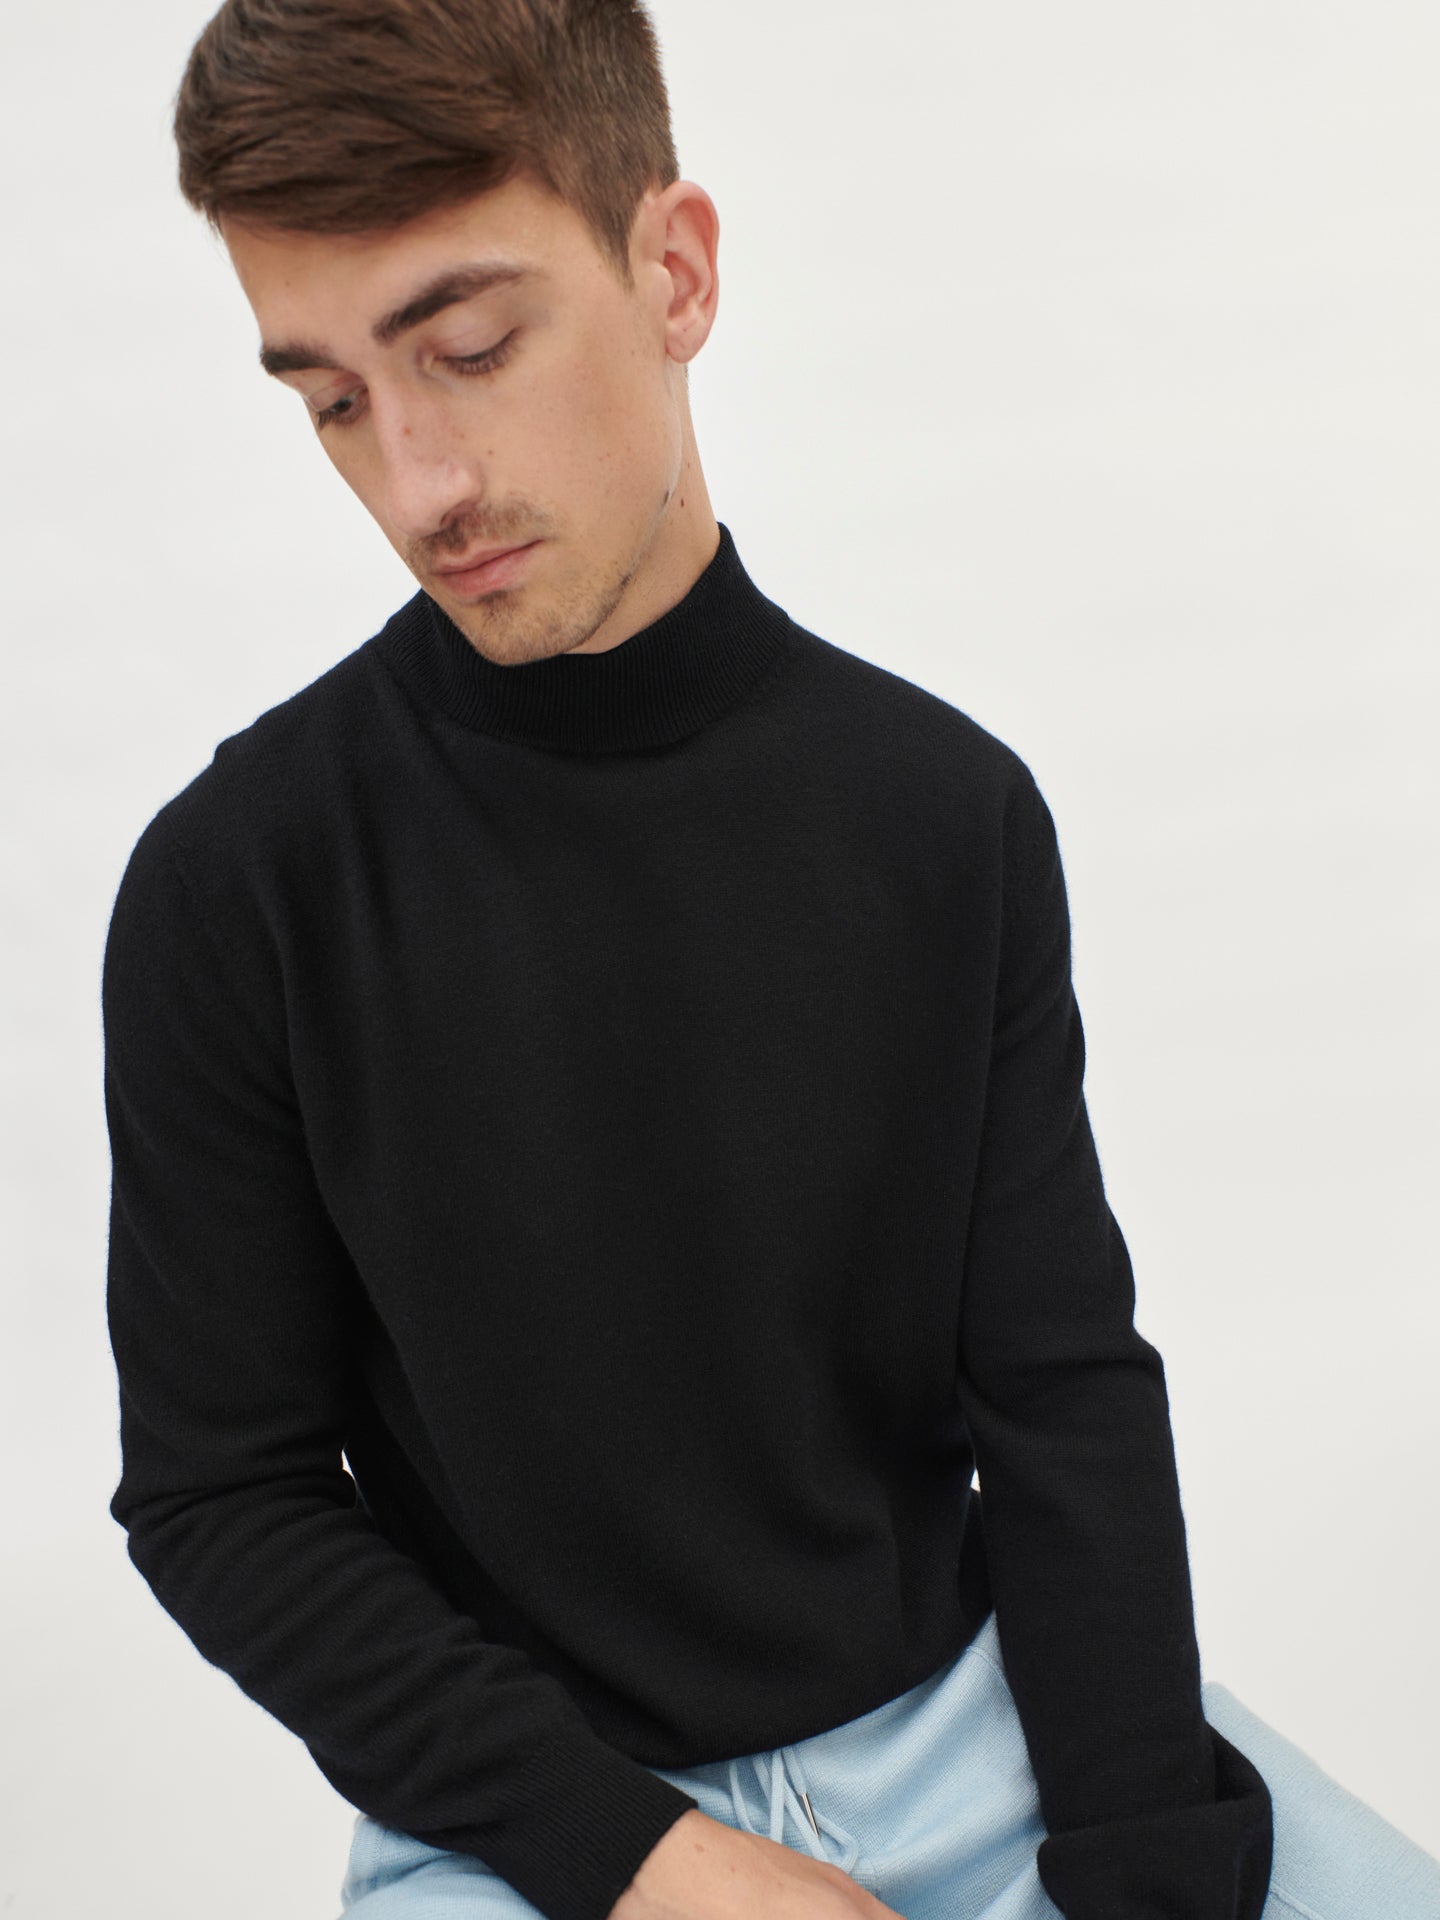 Men's Cashmere Basic Mock Neck Sweater Black - Gobi Cashmere